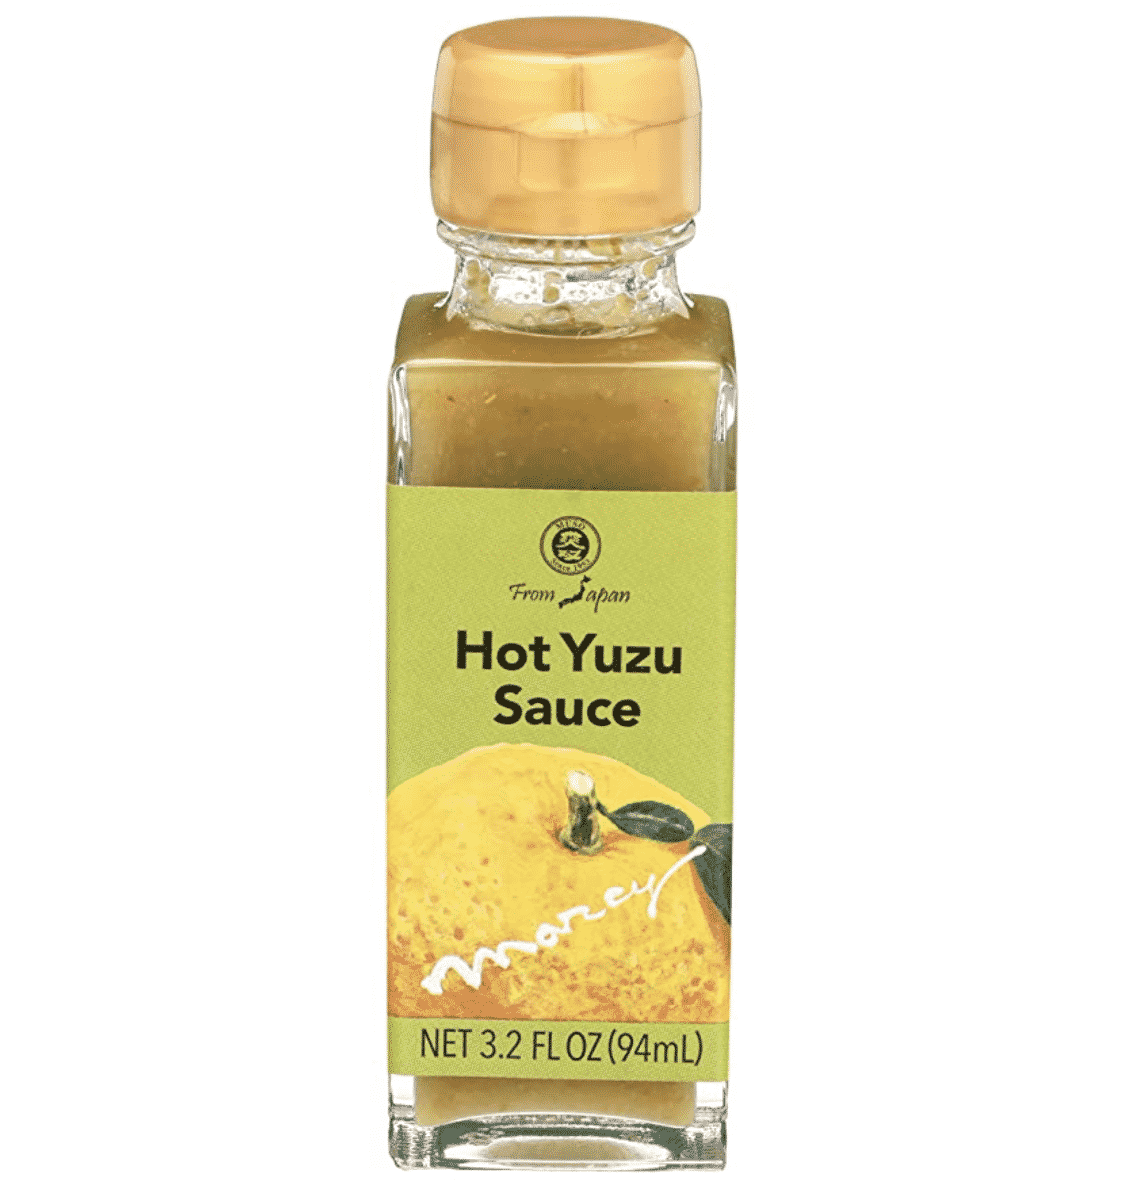 Hot Yuzu Sauce